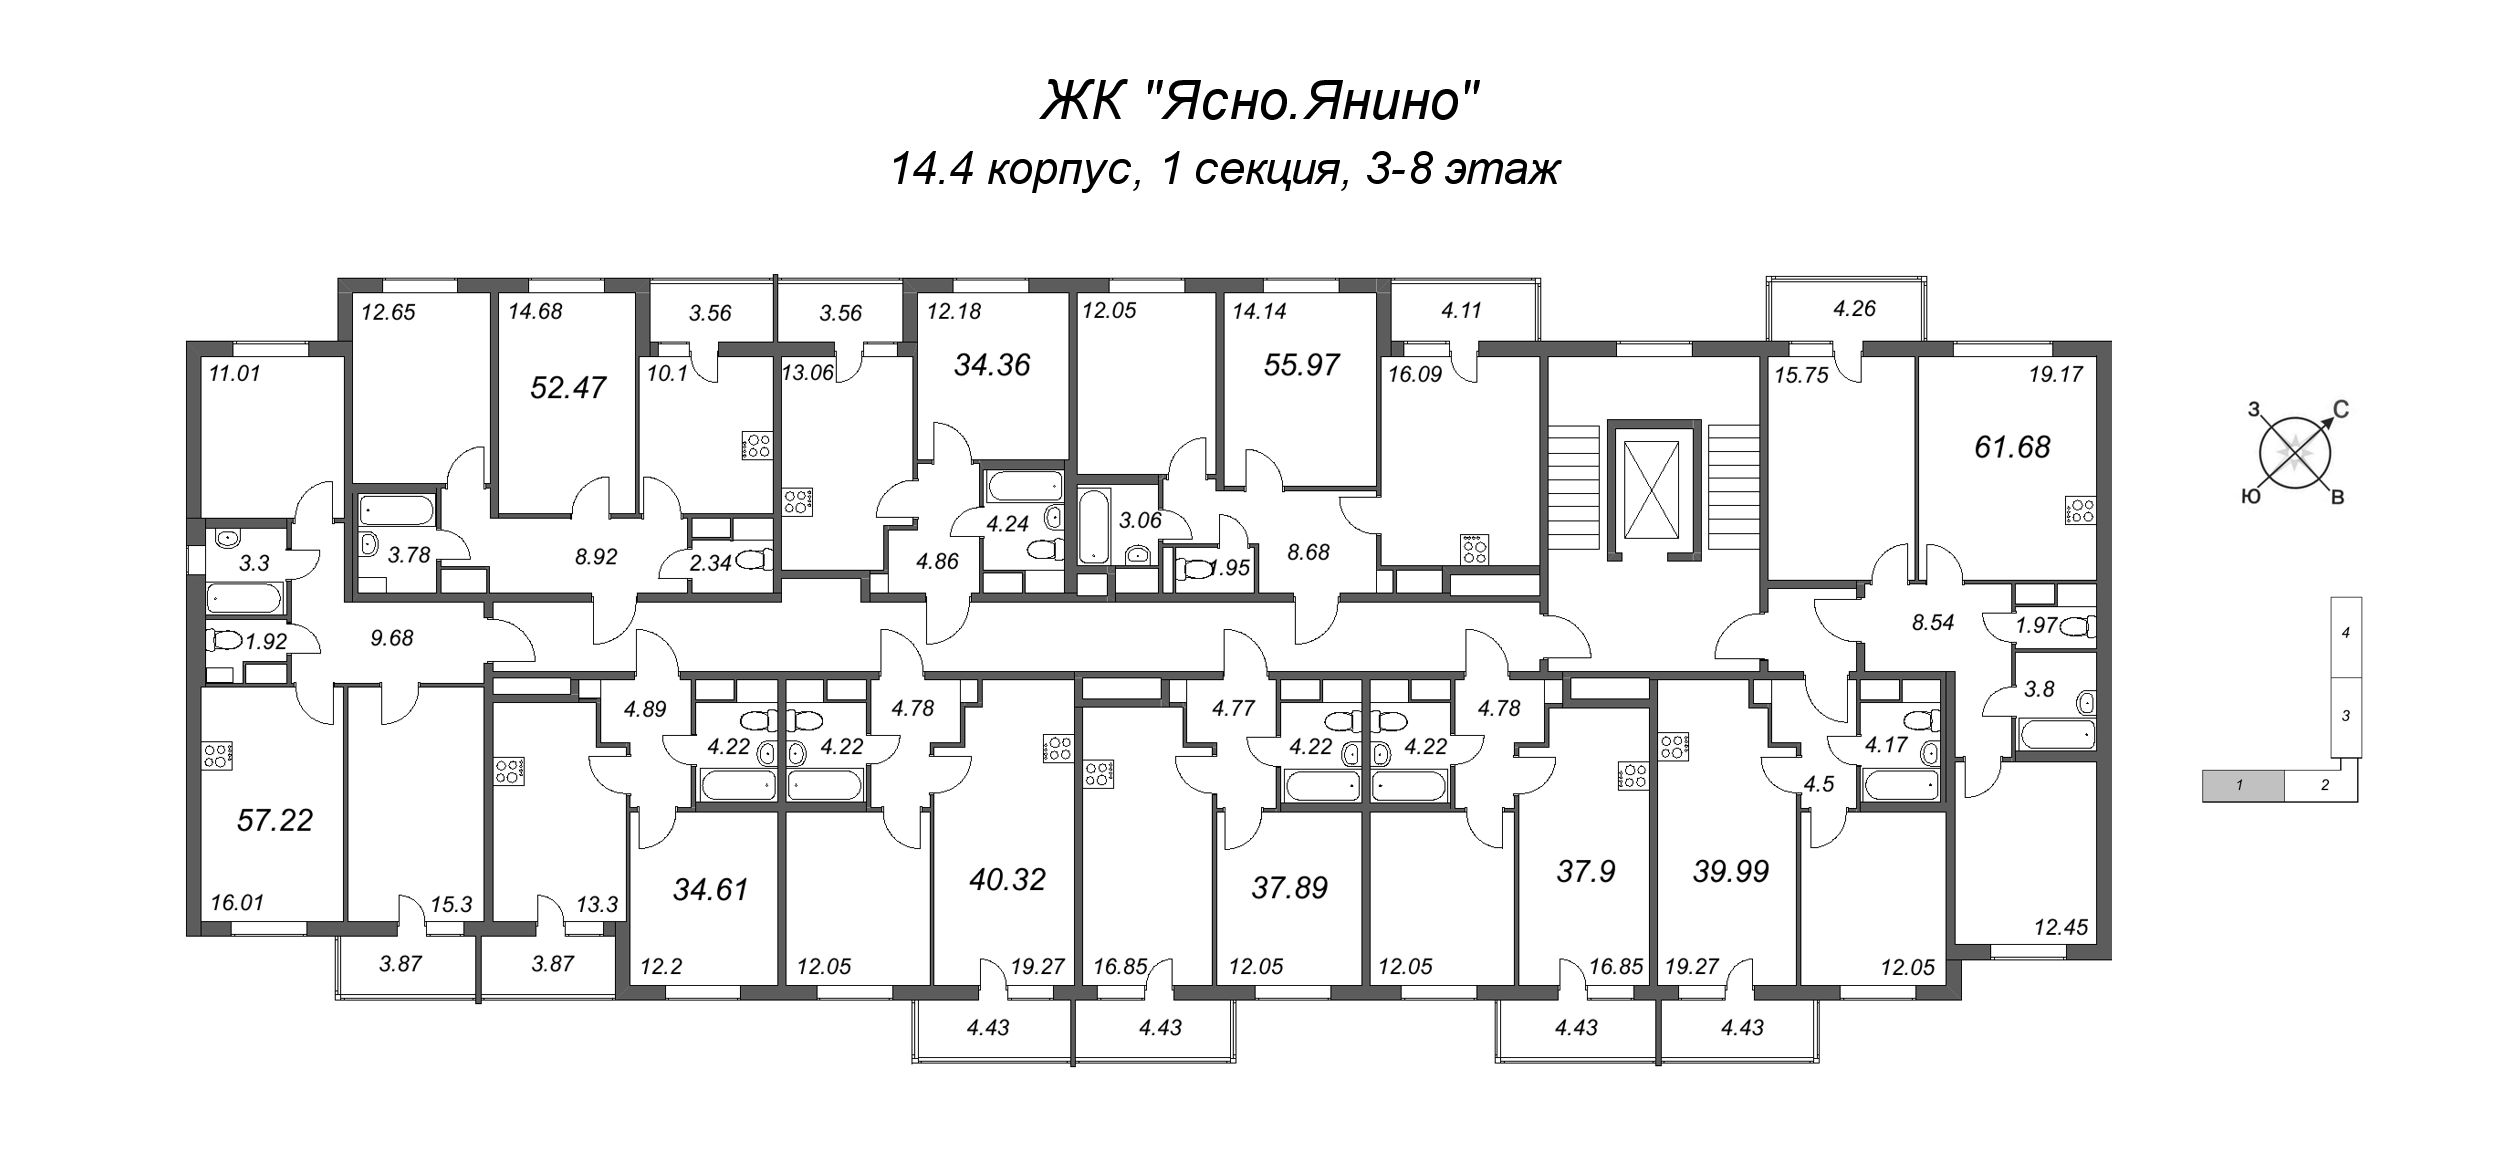 2-комнатная (Евро) квартира, 37.89 м² - планировка этажа